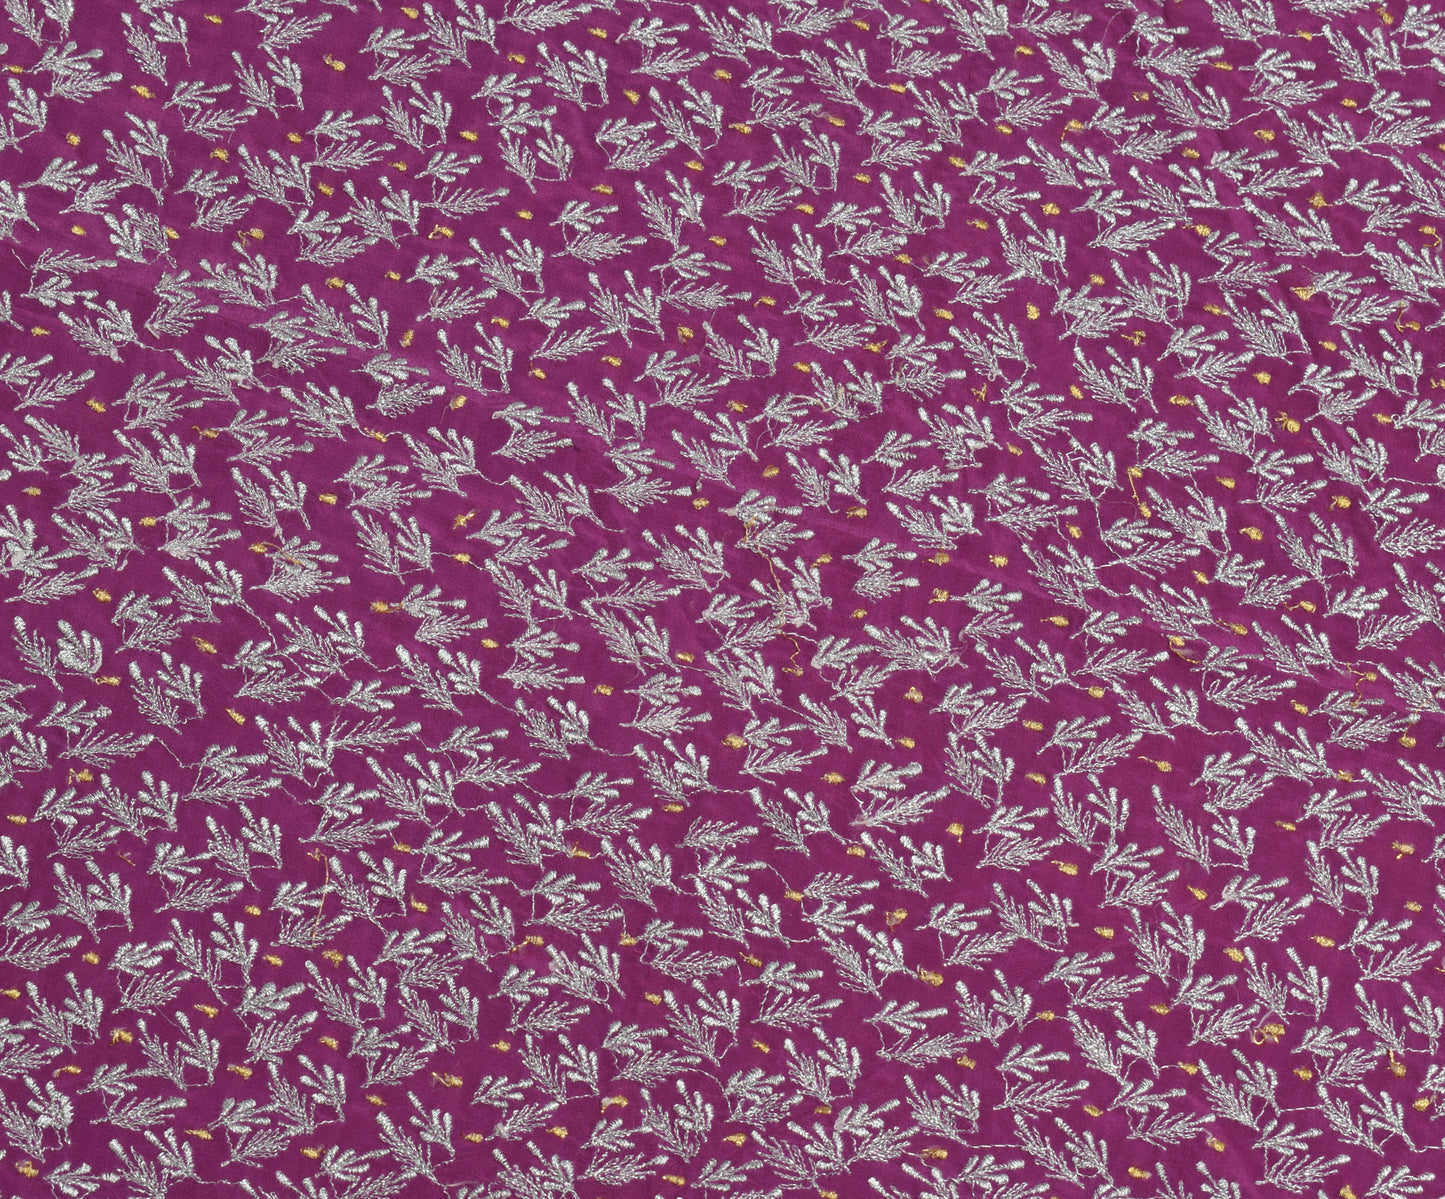 Sushila Vintage Purple Sari Remnant Scrap Crepe Silk Embroidered Craft Fabric